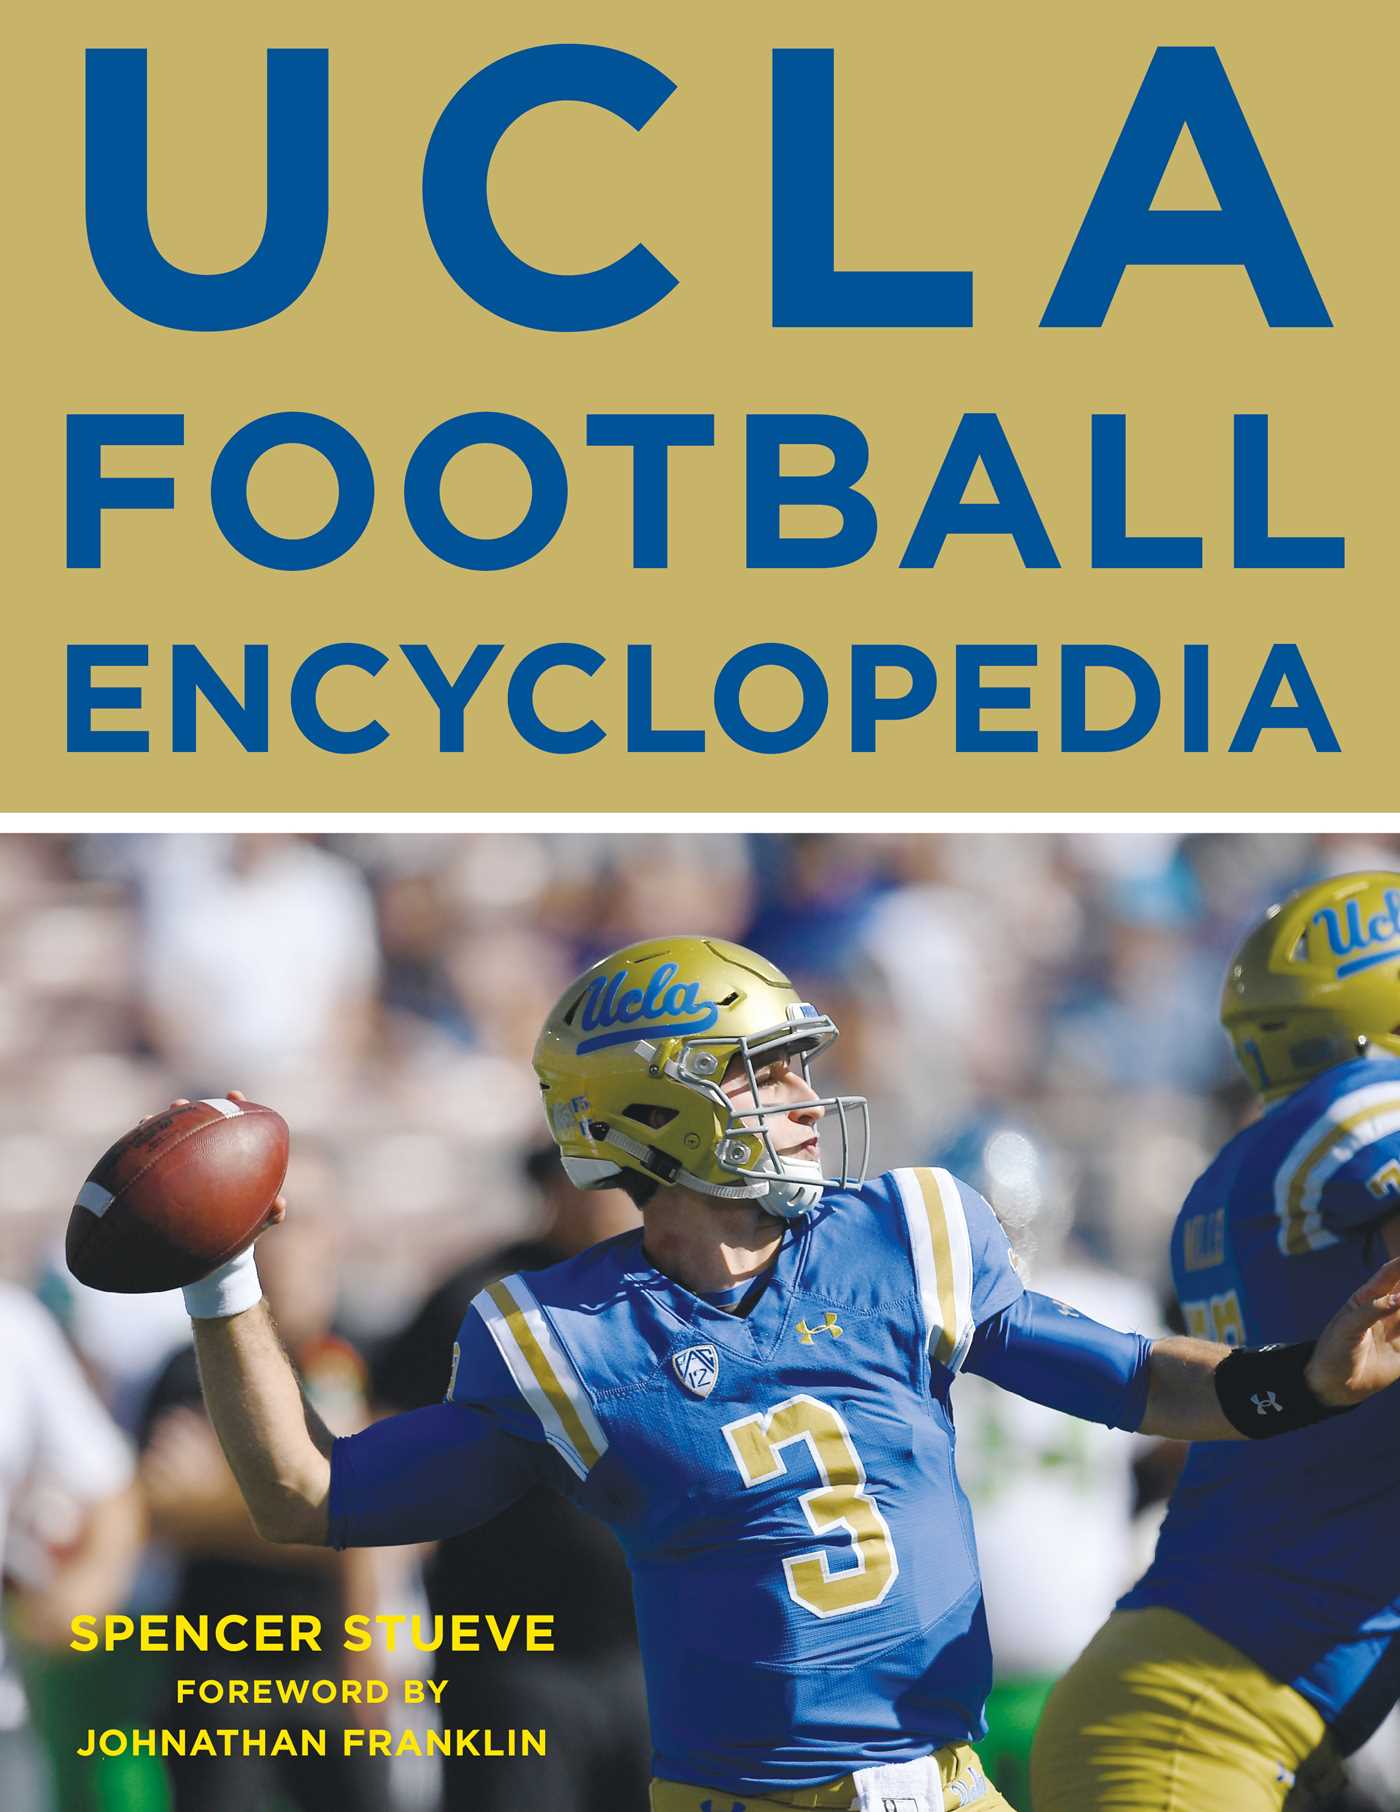 UCLA Football Encyclopedia – Books and more